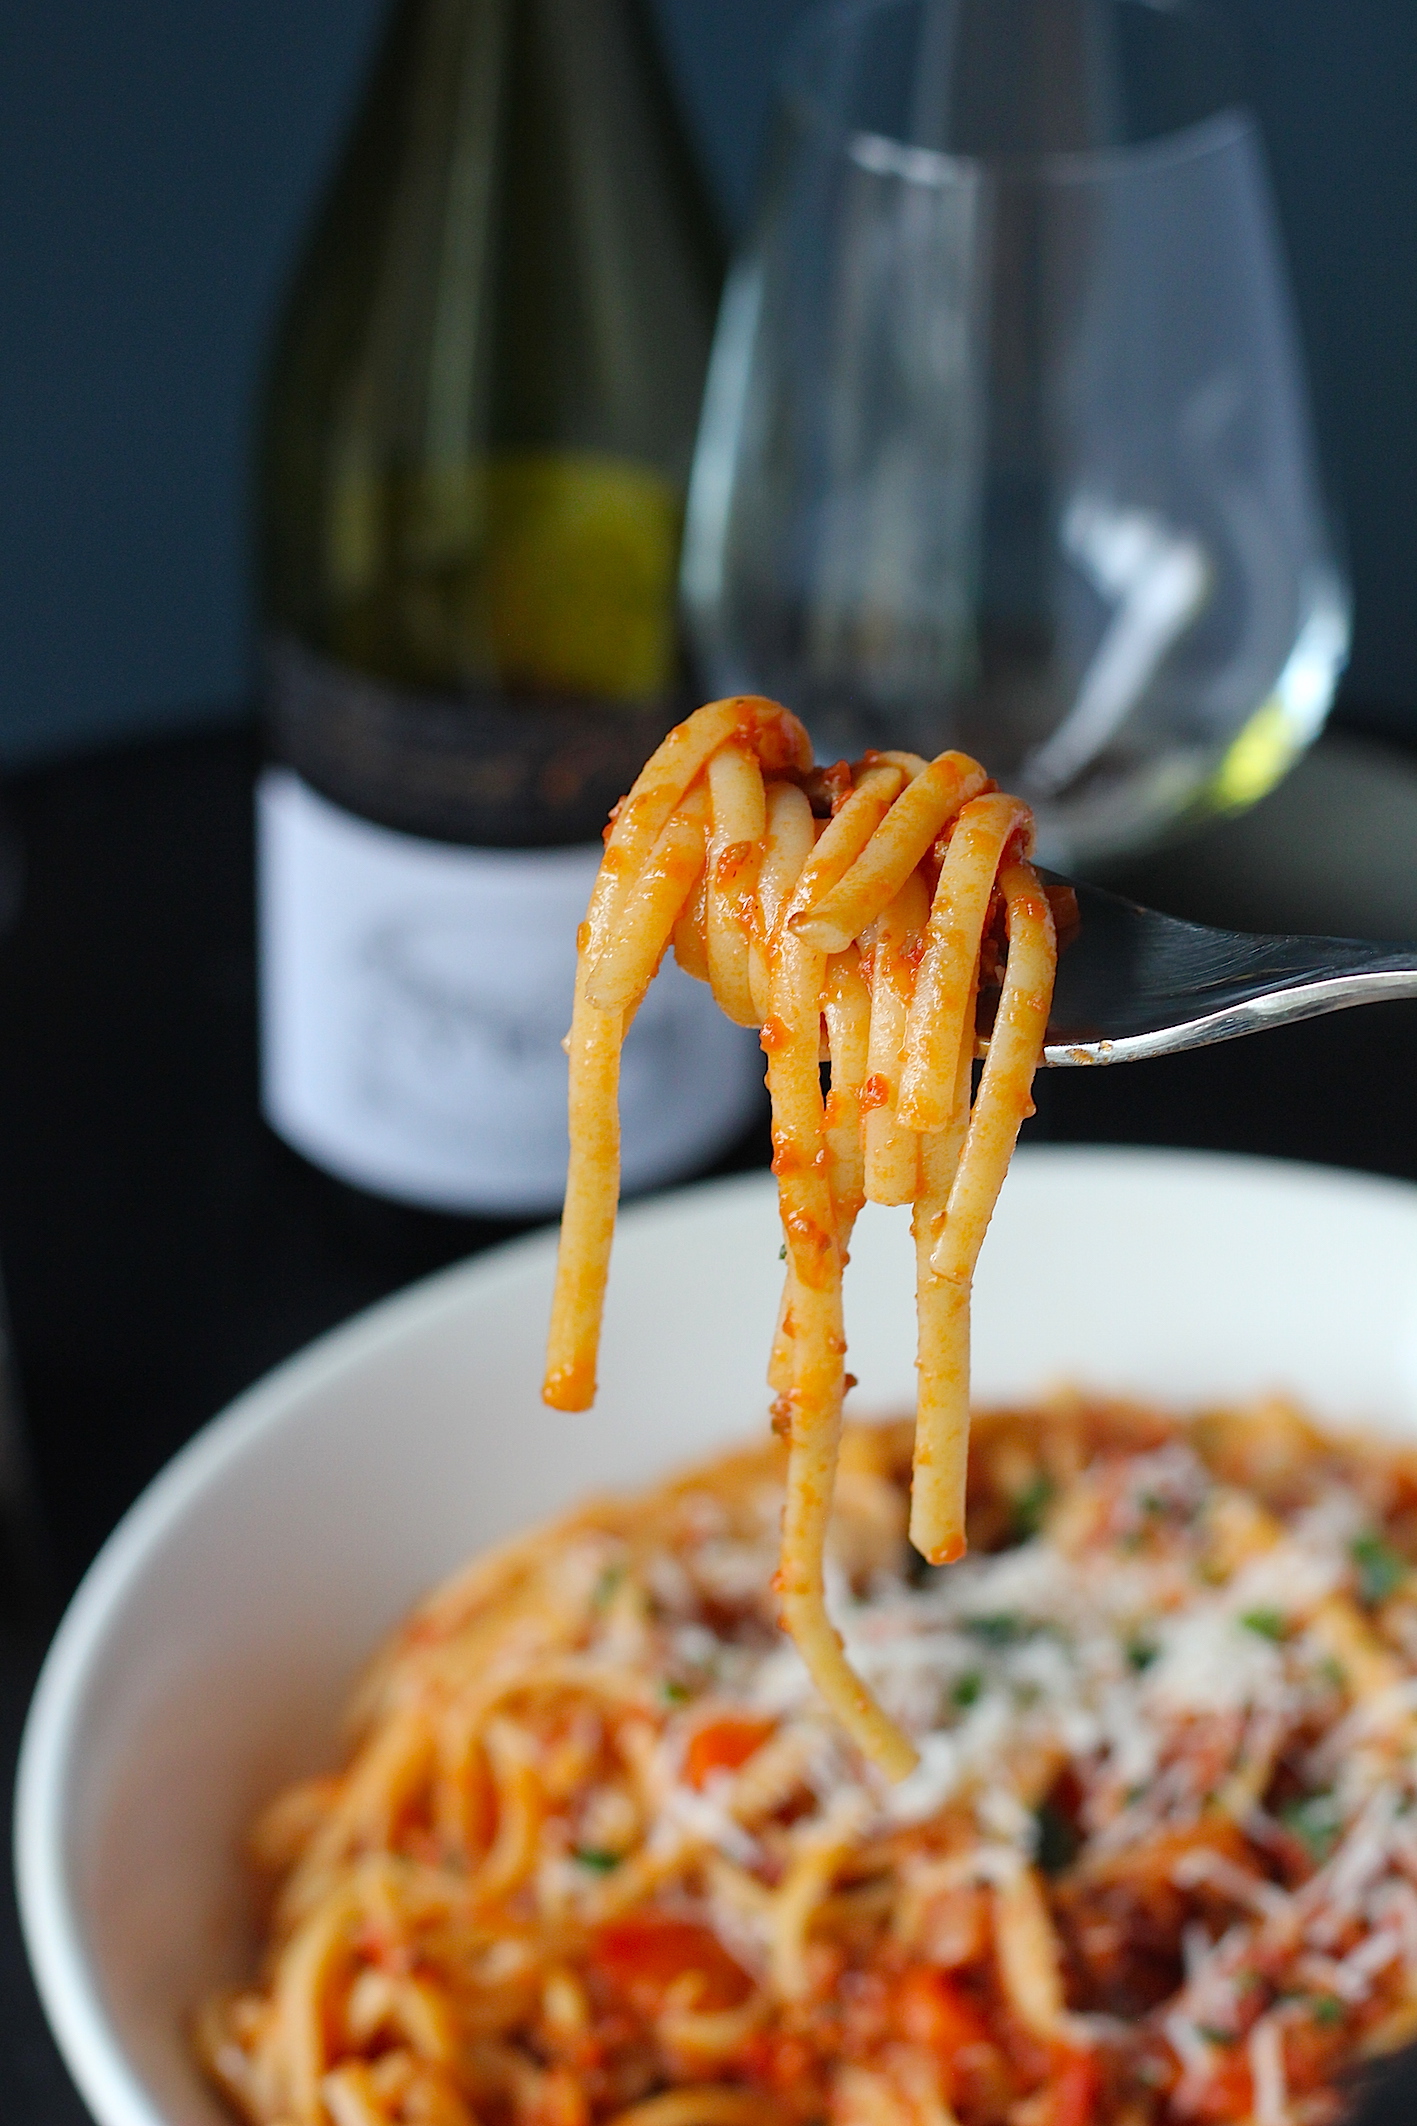 pasta bolognese | ENJOY! The Good Life